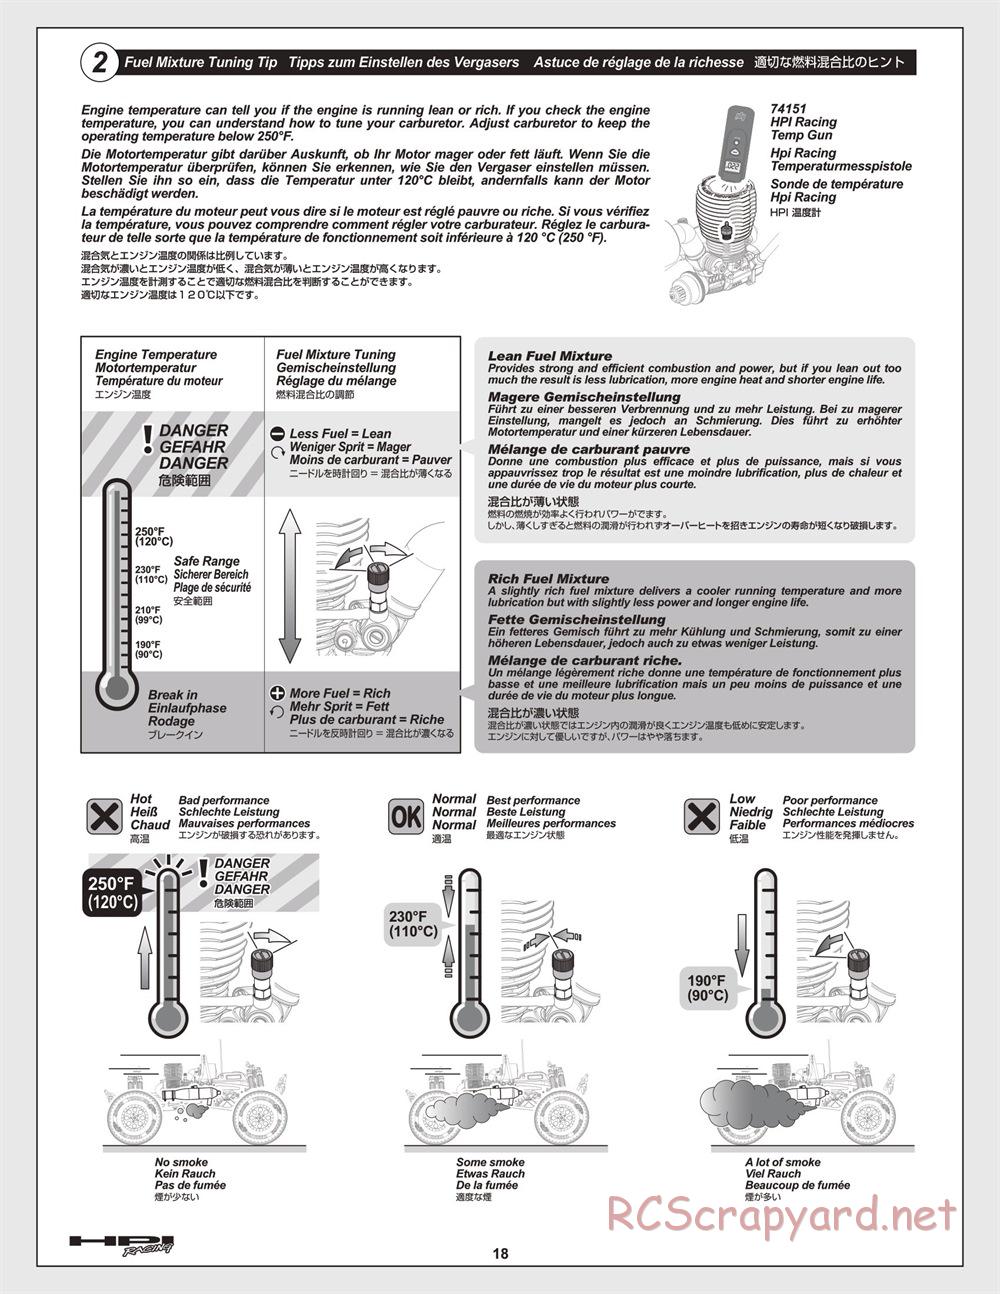 HPI - Savage XL 5.9 - Manual - Page 18